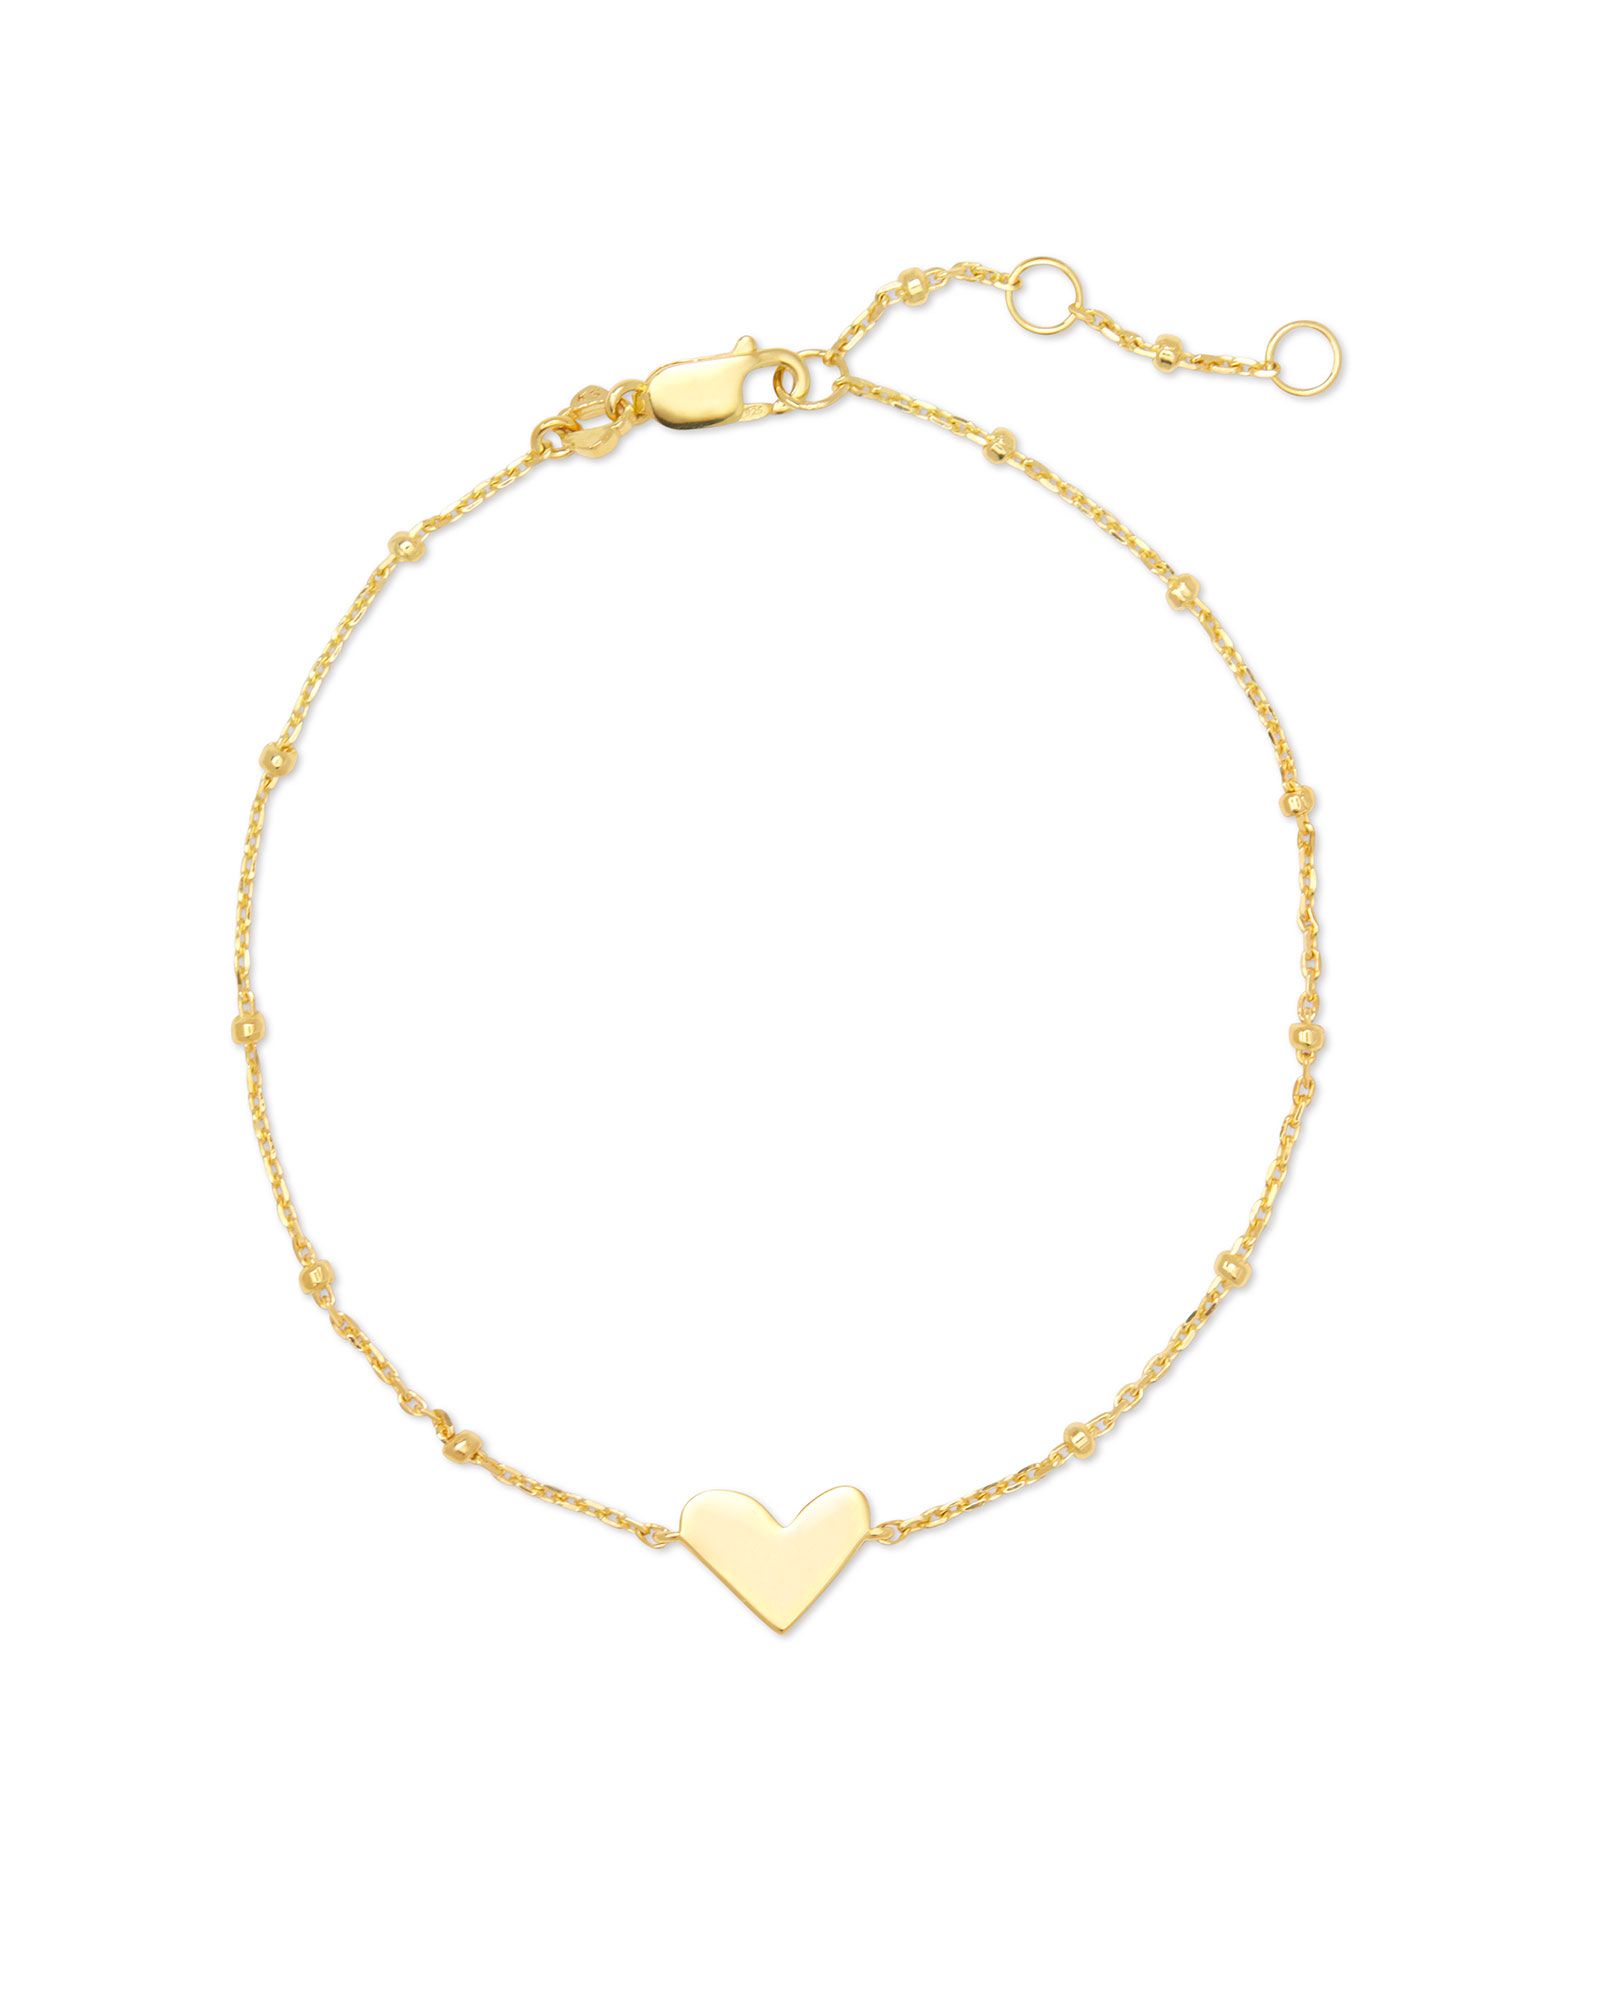 Ari Heart Delicate Chain Bracelet in 18k Yellow Gold Vermeil | Kendra Scott | Kendra Scott